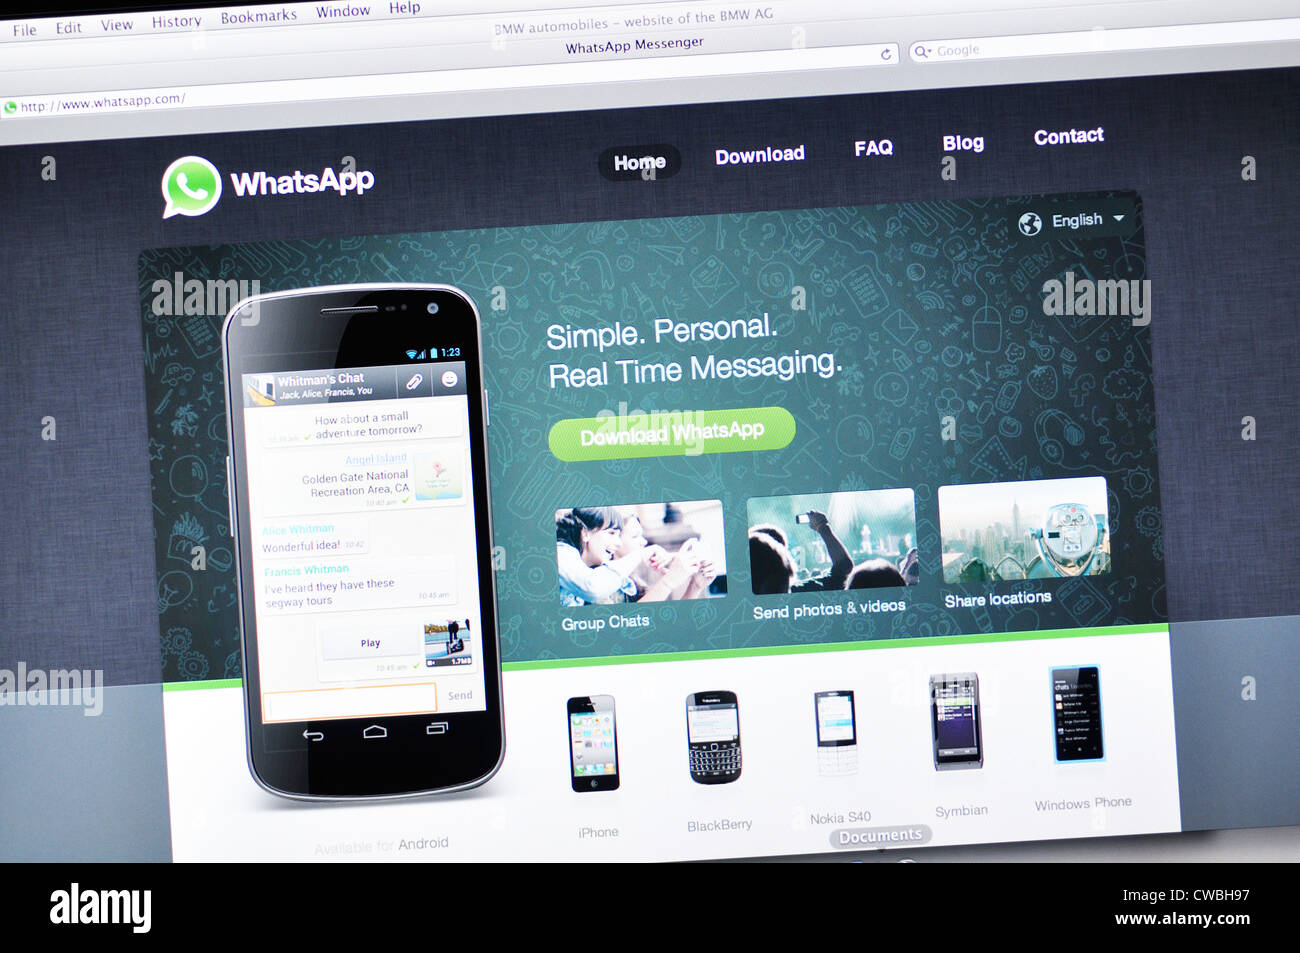 Whatsapp website - messaging app for mobile phones Stock Photo